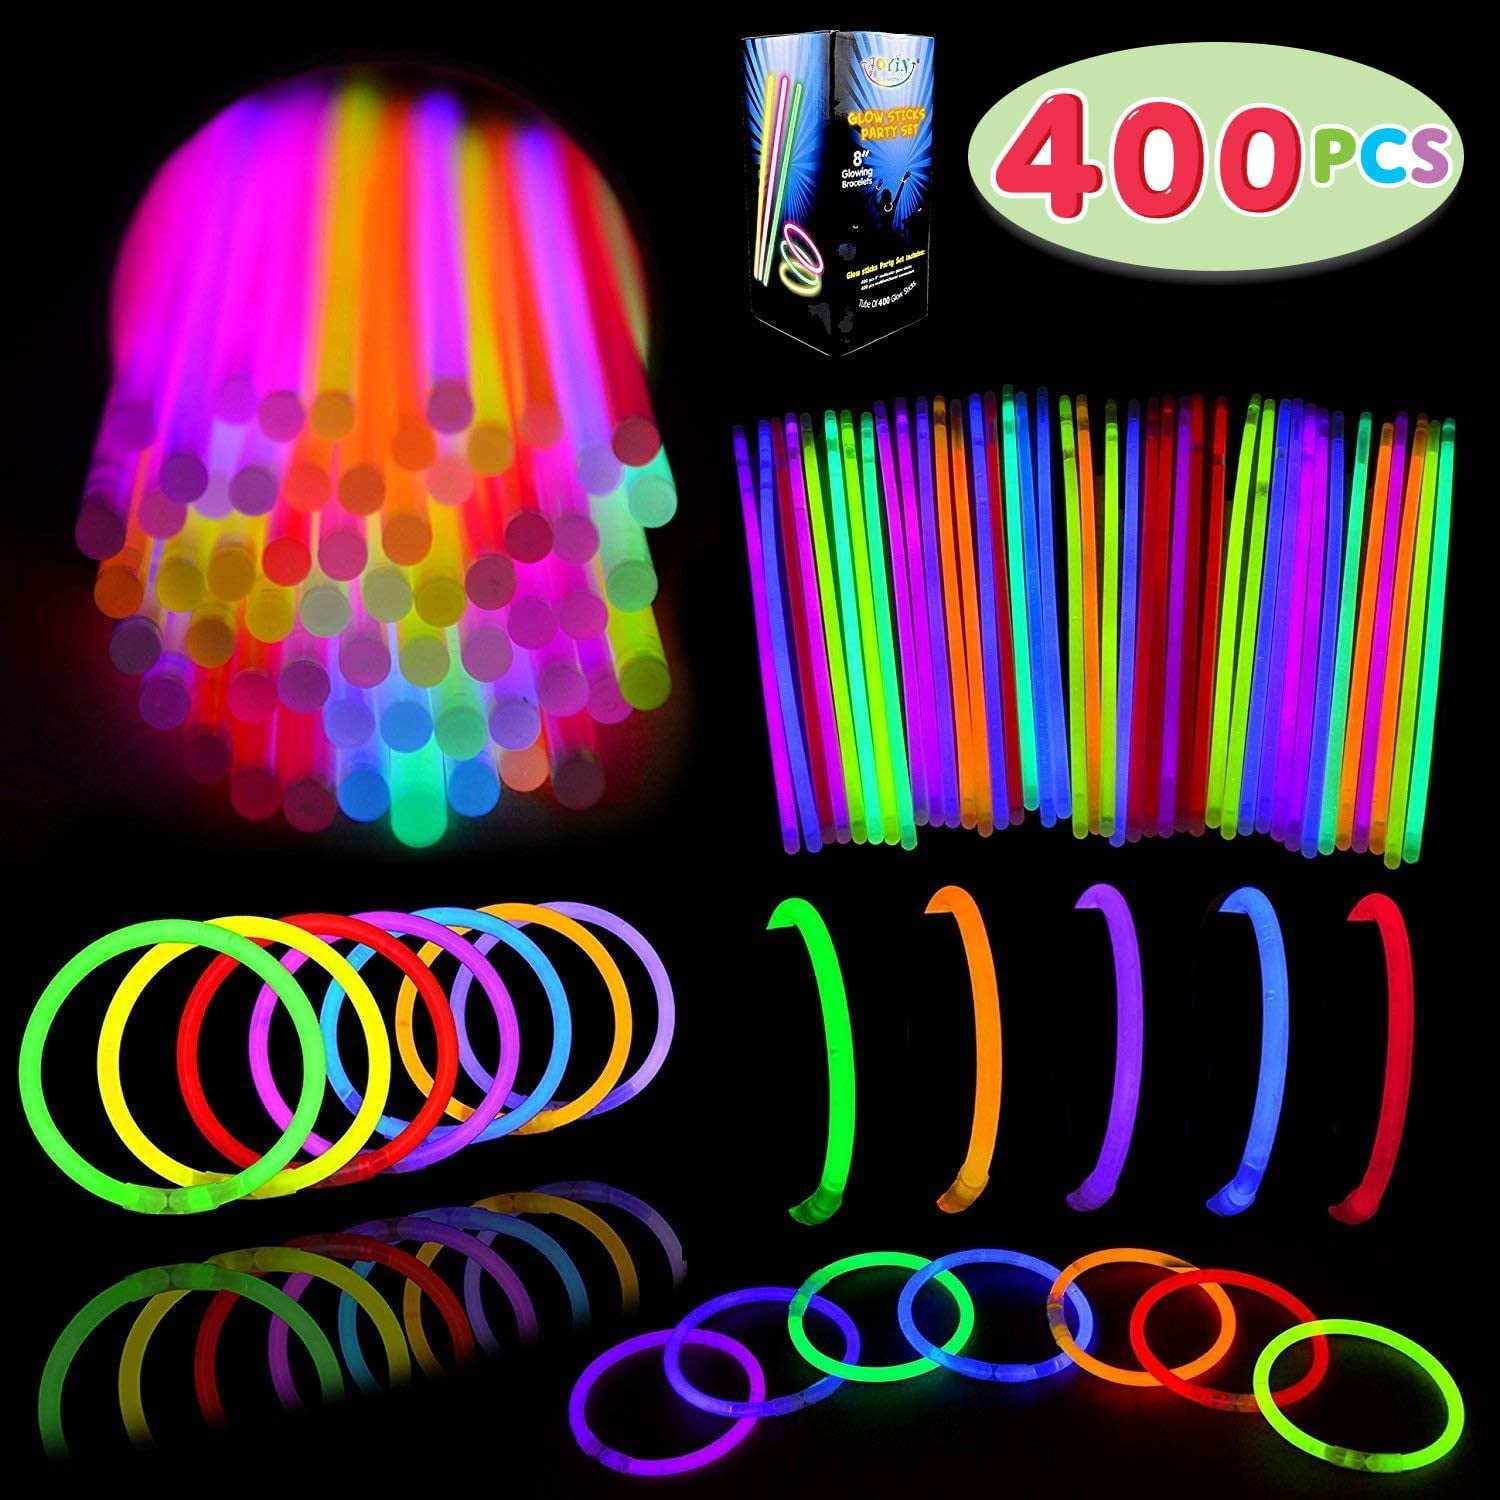 60 Glow Sticks Bracelets 8" 5 COLORS PREMIUM for Party Holloween Wedding concert 